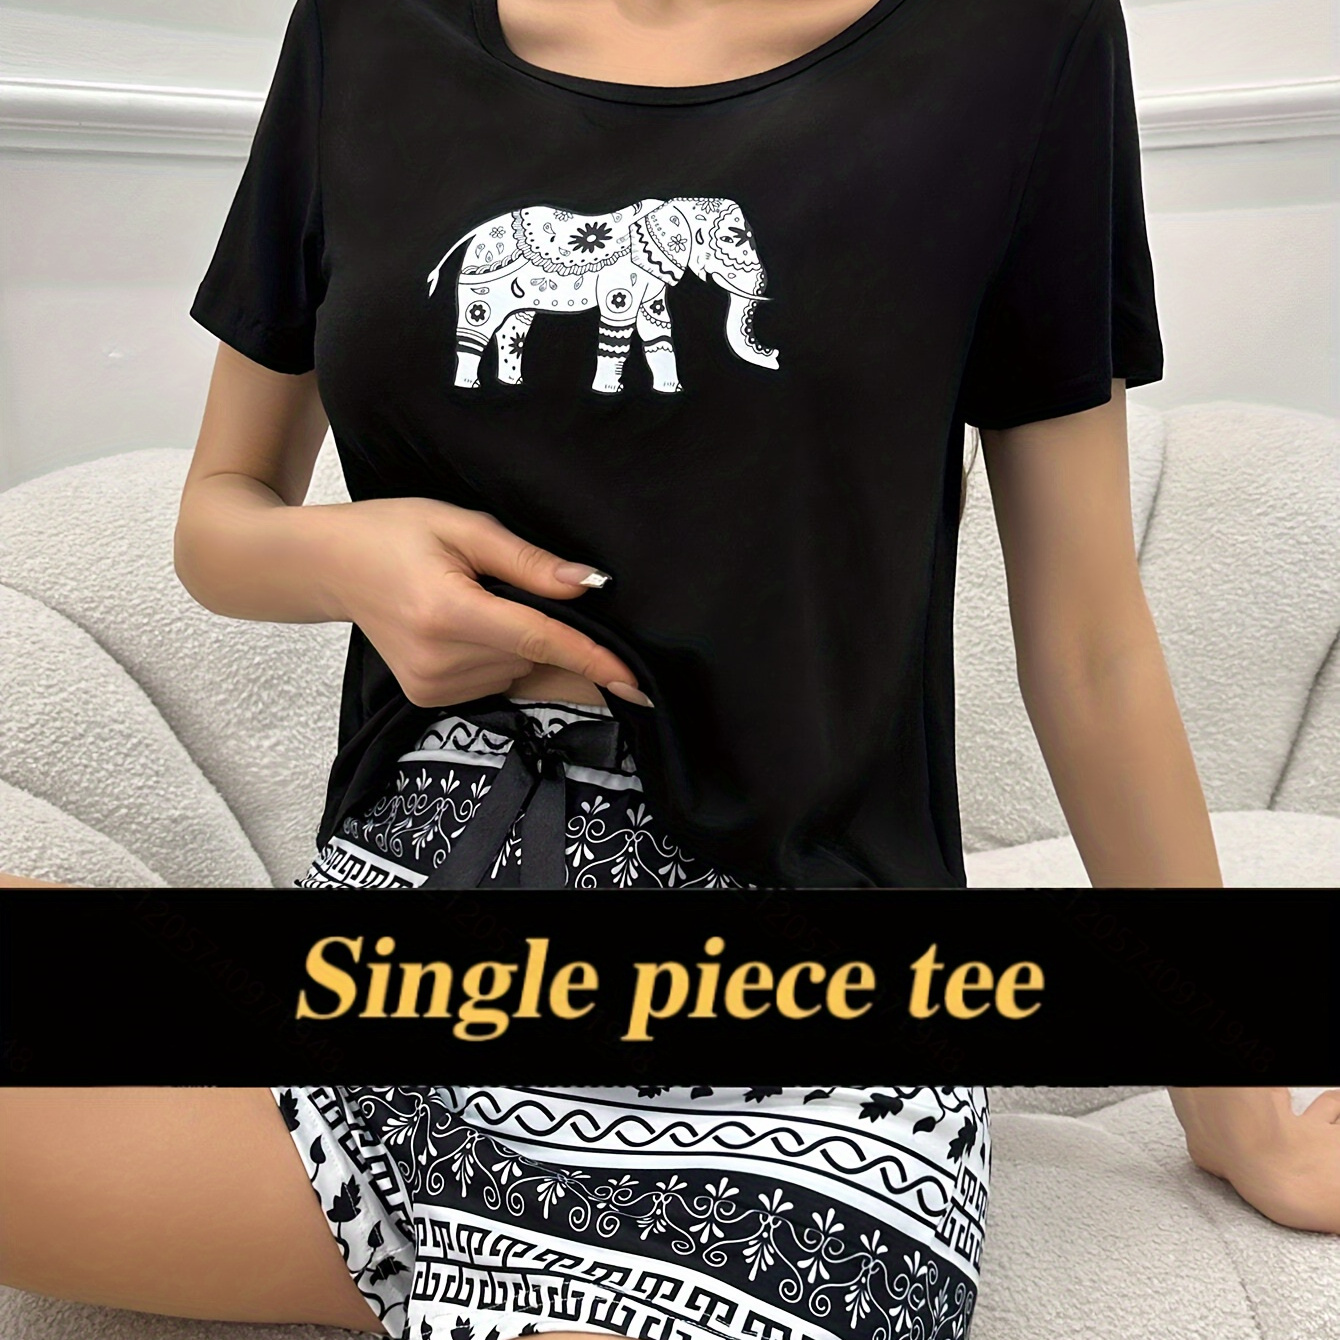 

Women's Casual Short Sleeve T-shirt Sleepwear, Comfortable Pajama Top With Elephant Print